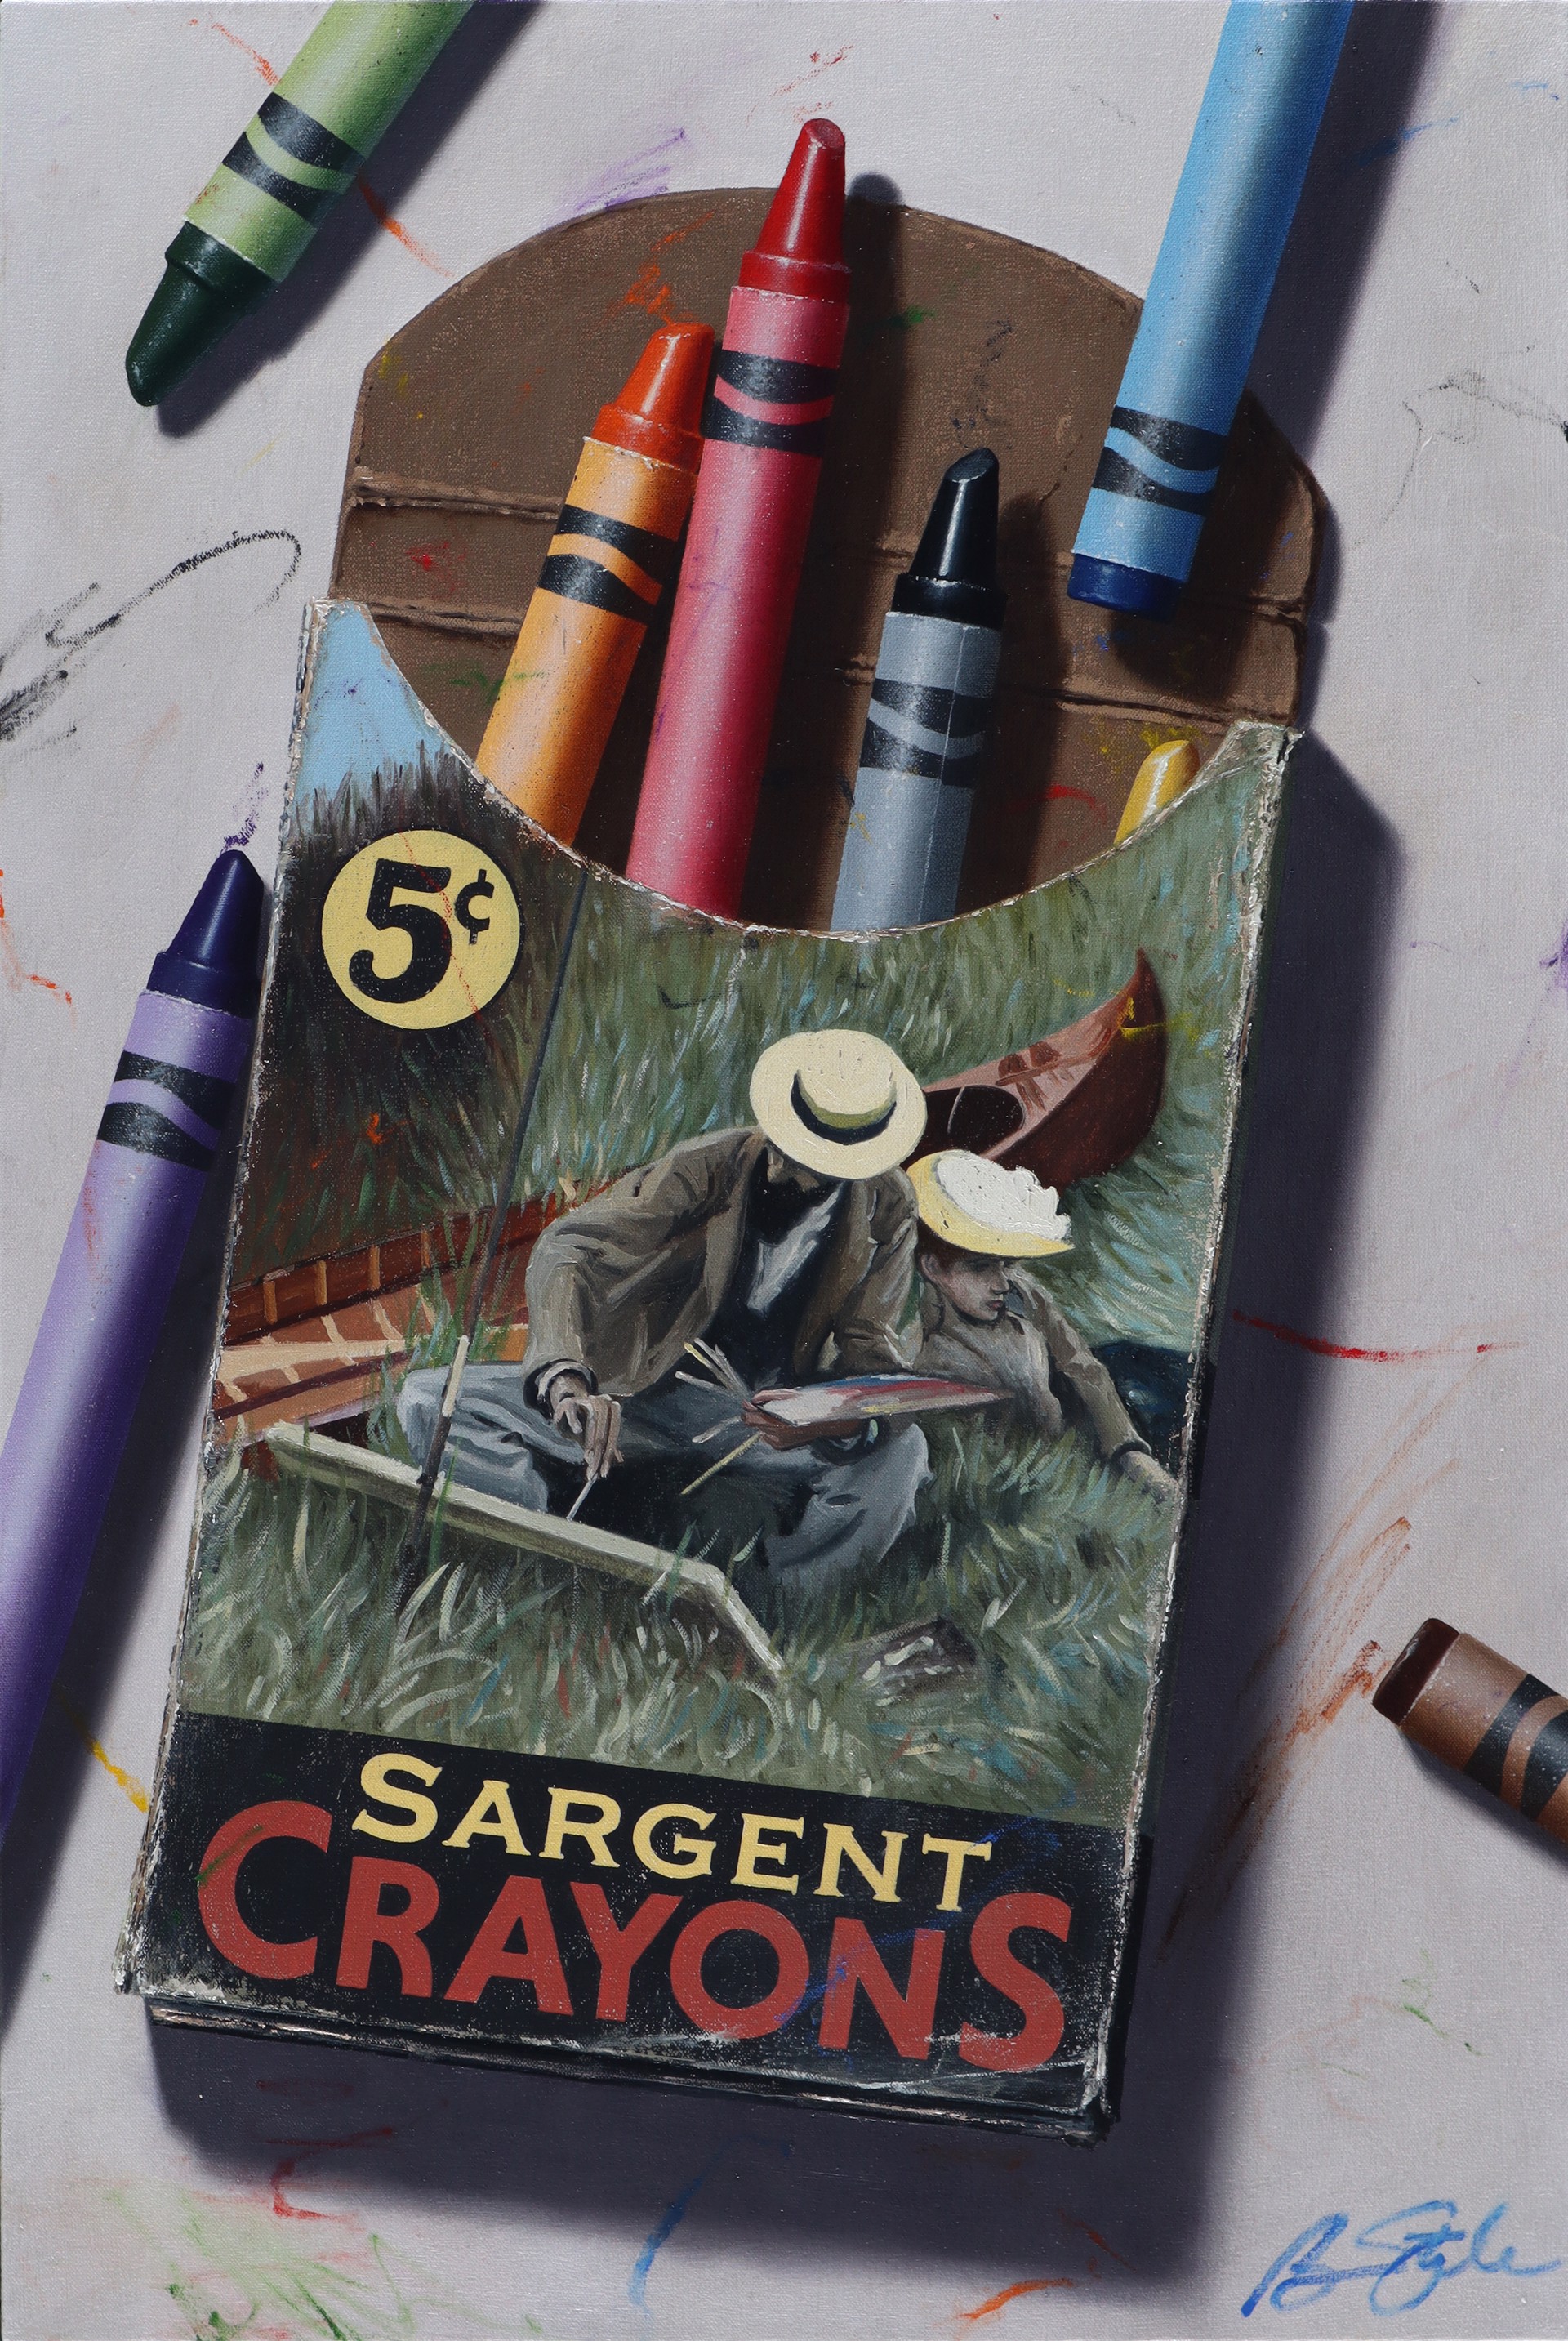 Sargent Crayons: Sketching by BEN STEELE